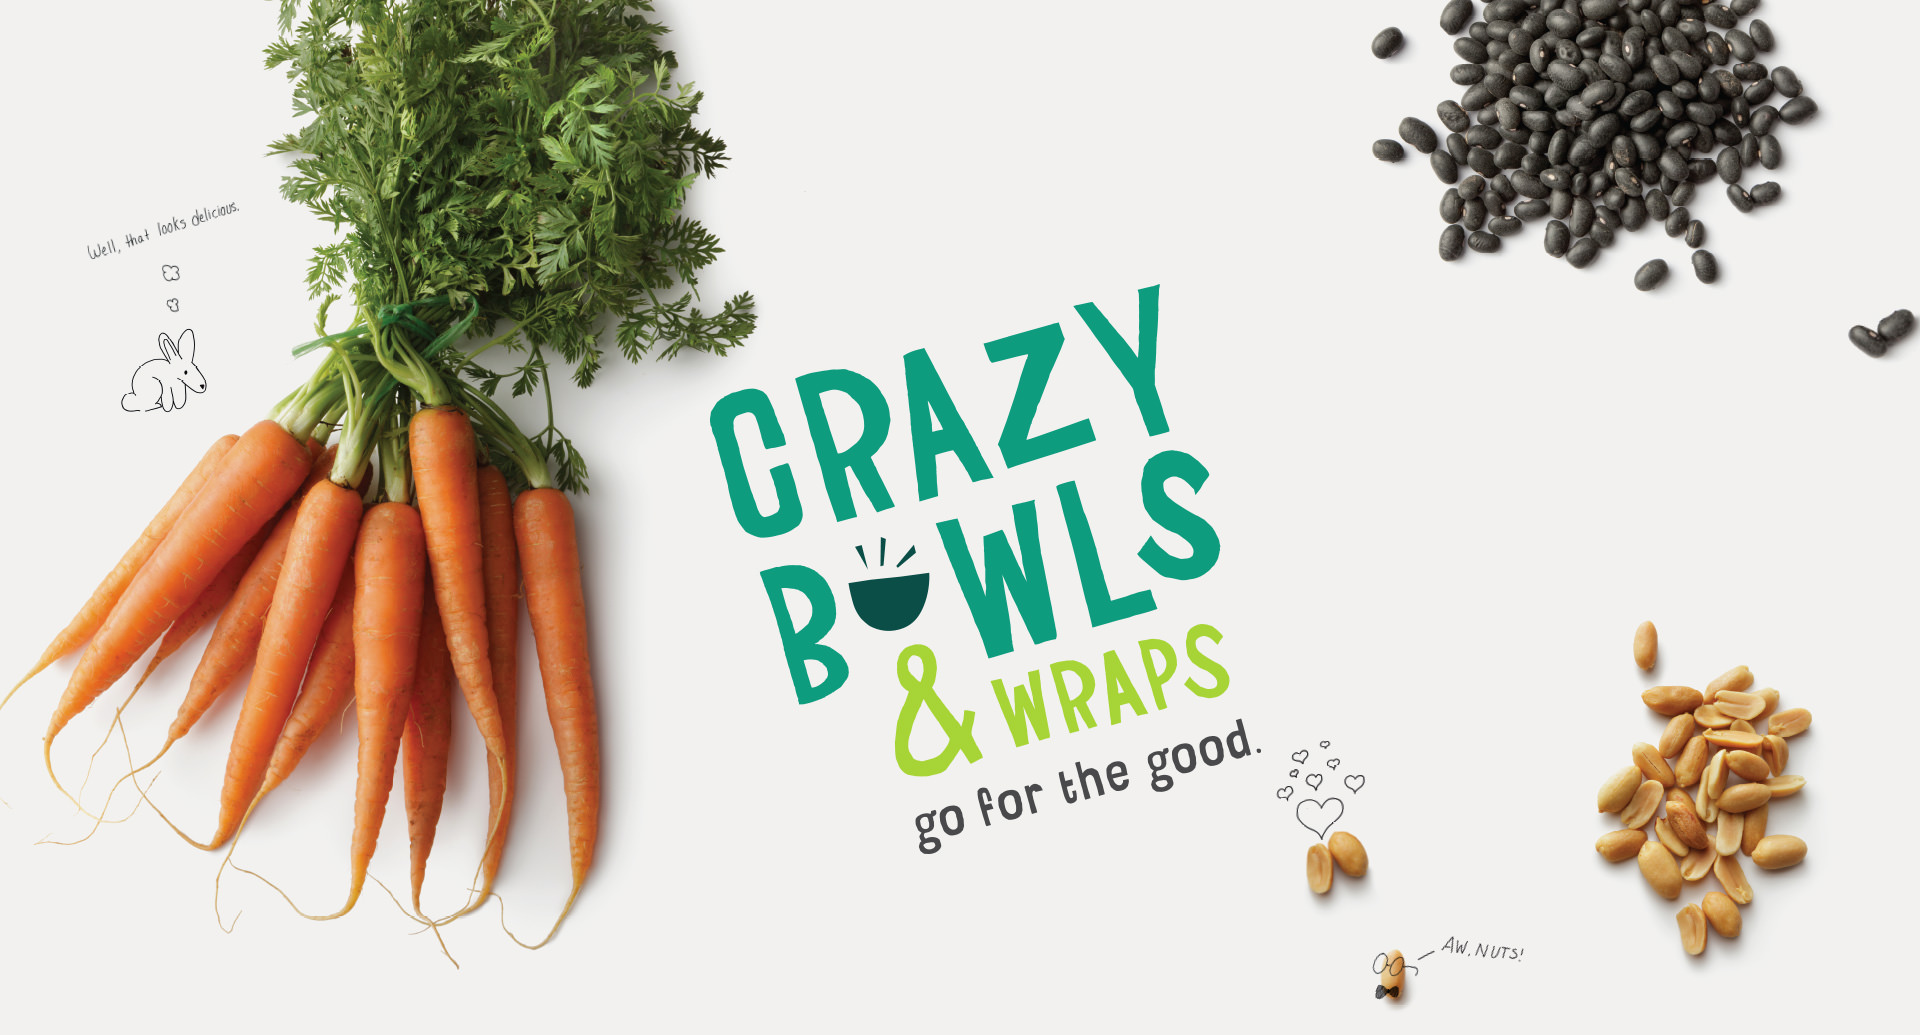 Crazy Bowls and Wraps Restaurant Design Branding Elements